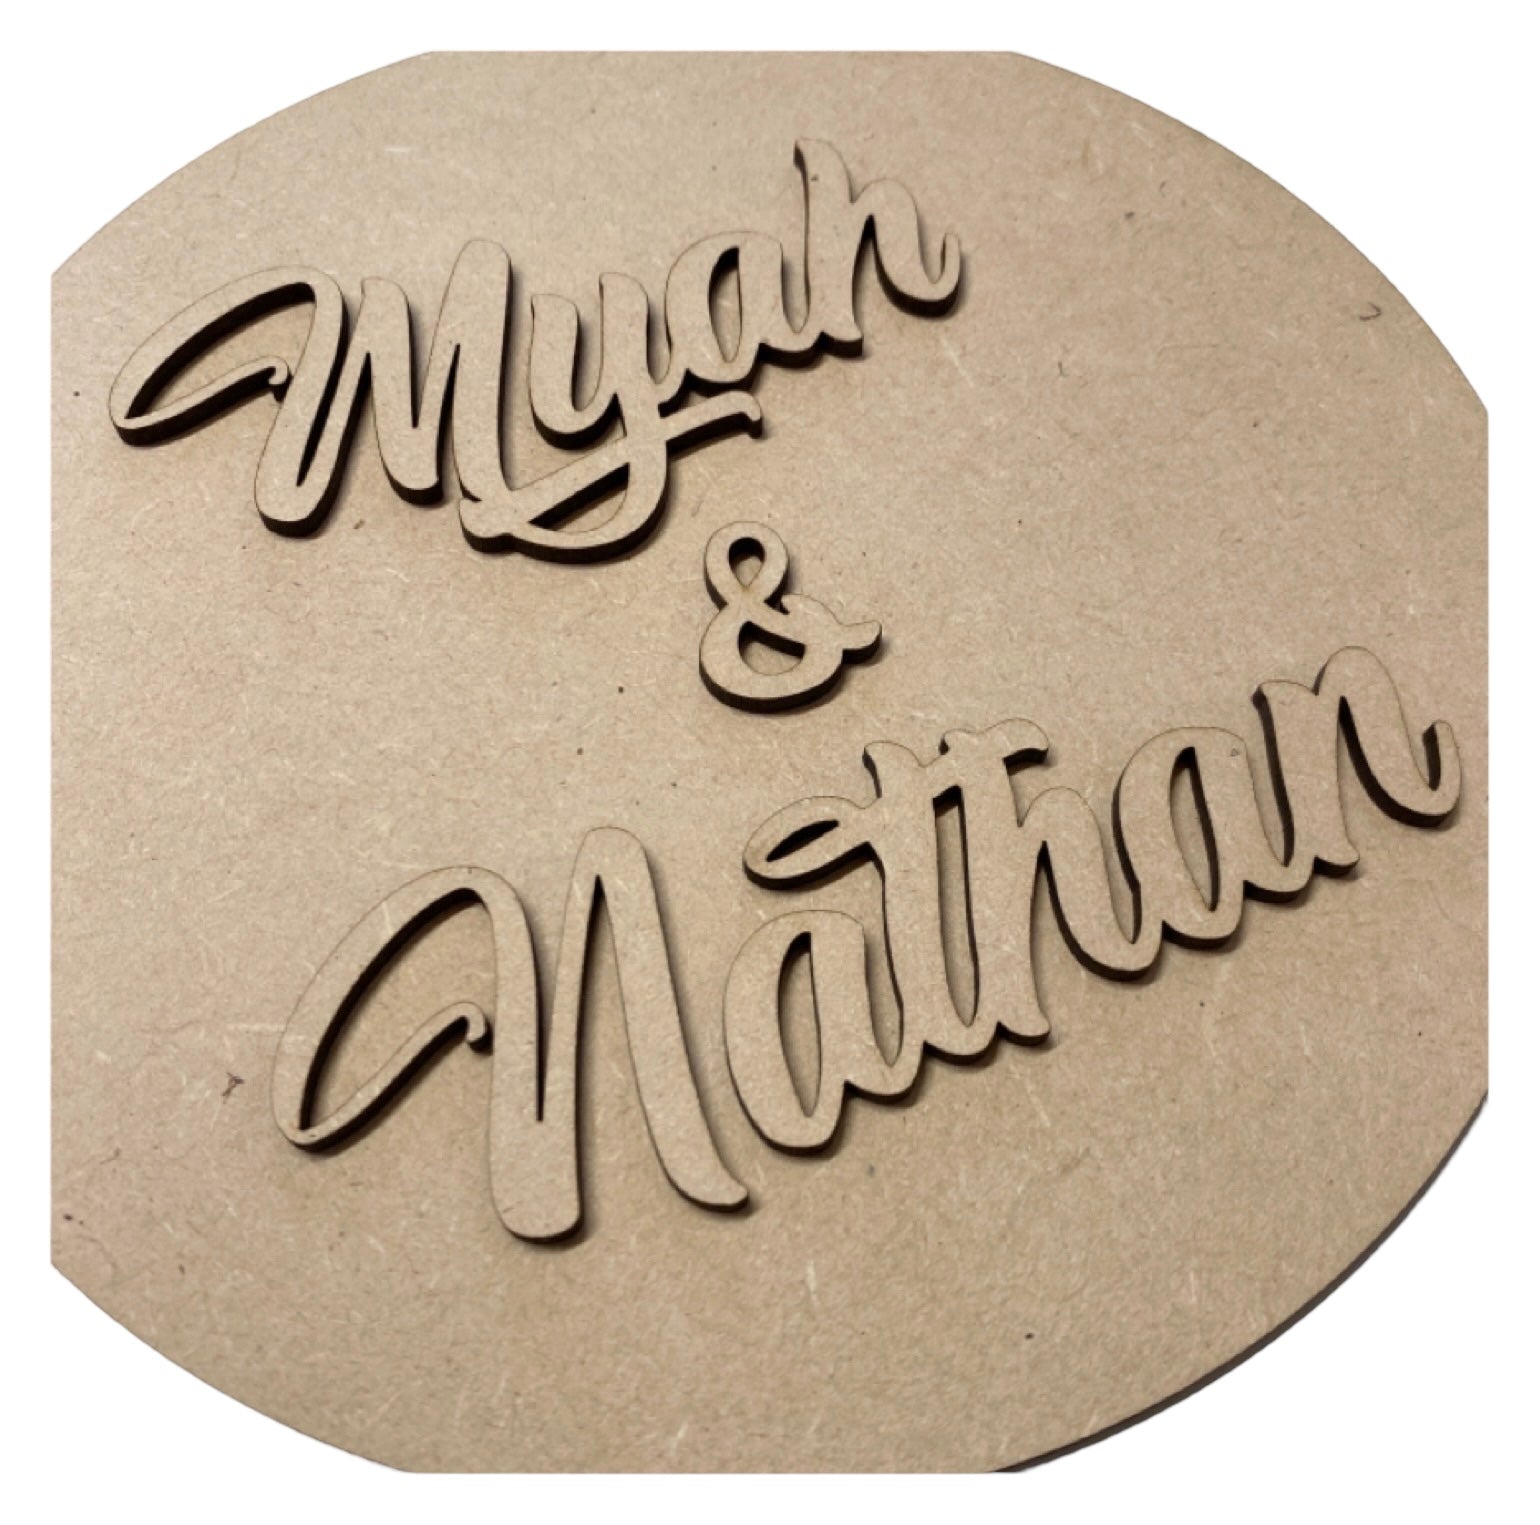 Name Wedding Birthday Custom Sign MDF Wood DIY Craft - The Renmy Store Homewares & Gifts 